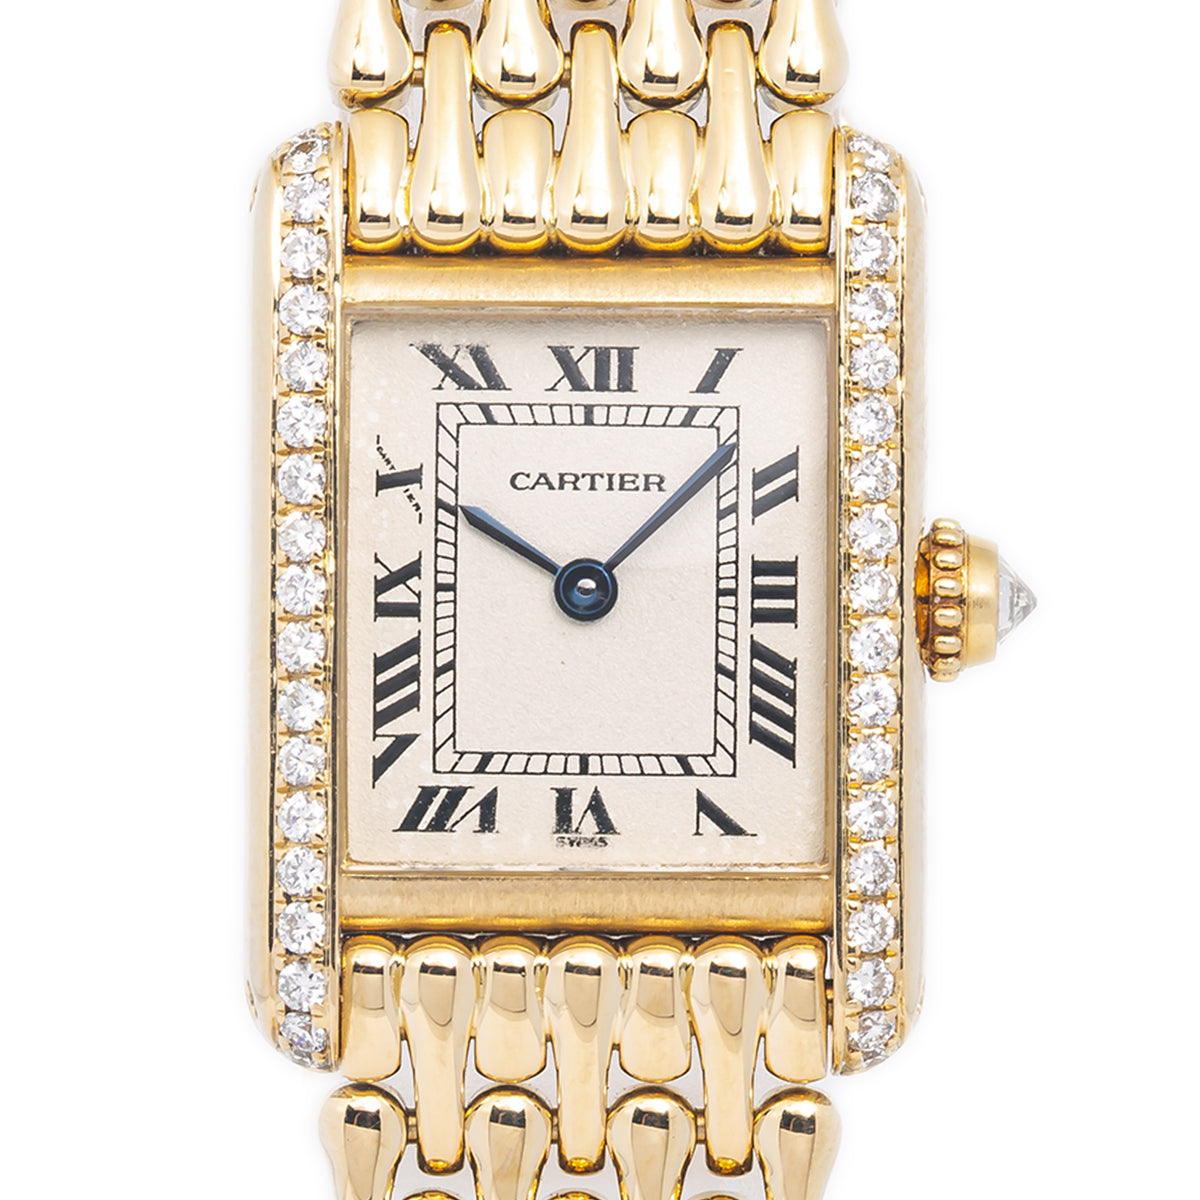 Cartier Tank Louis 1141 18k Yellow Gold Factory Diamonds Quartz Ladie Watch 18mm